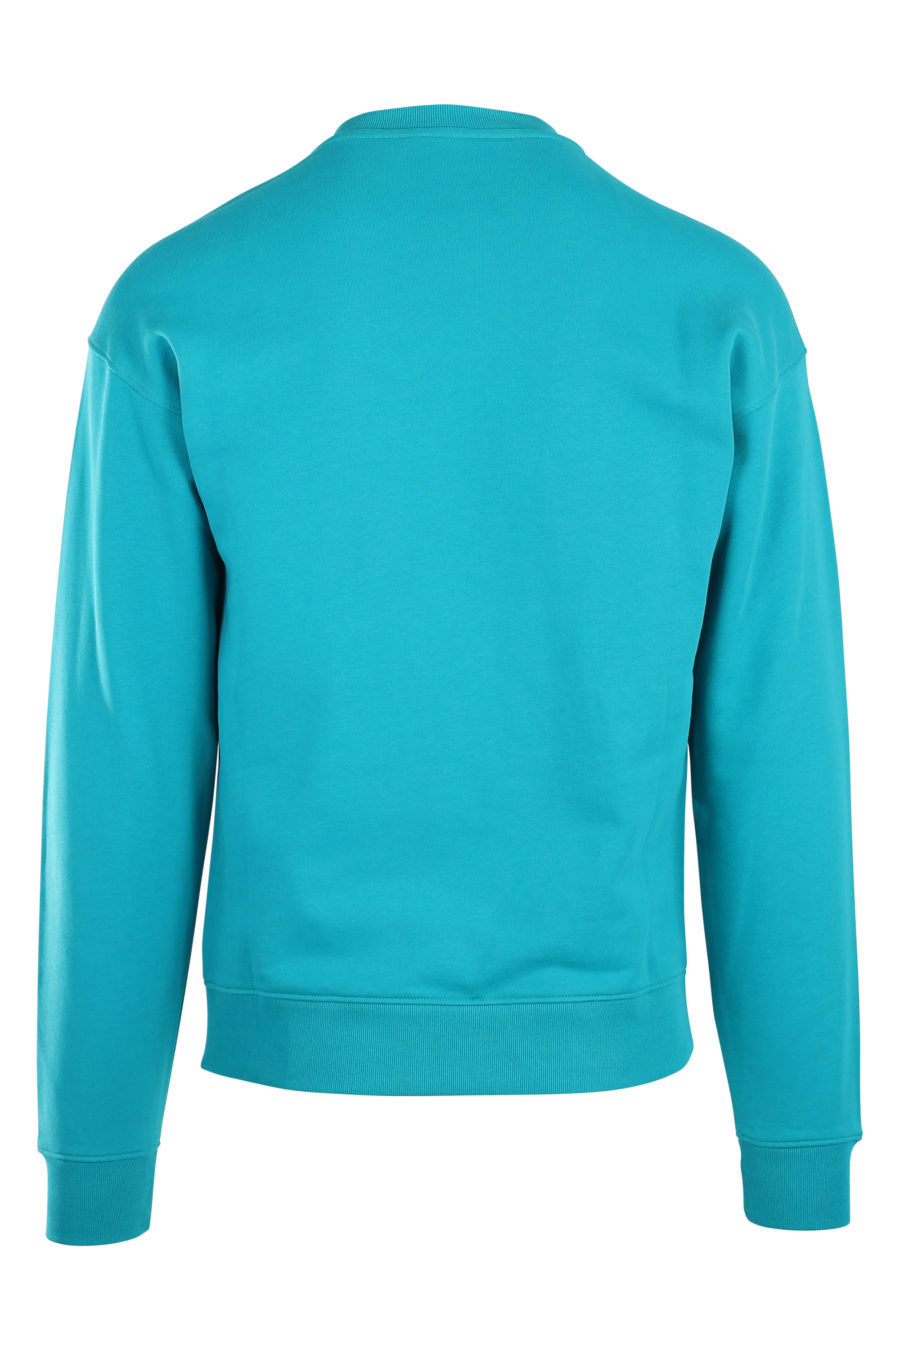 Turquoise sweatshirt with milano "fantasy" logo - IMG 9932